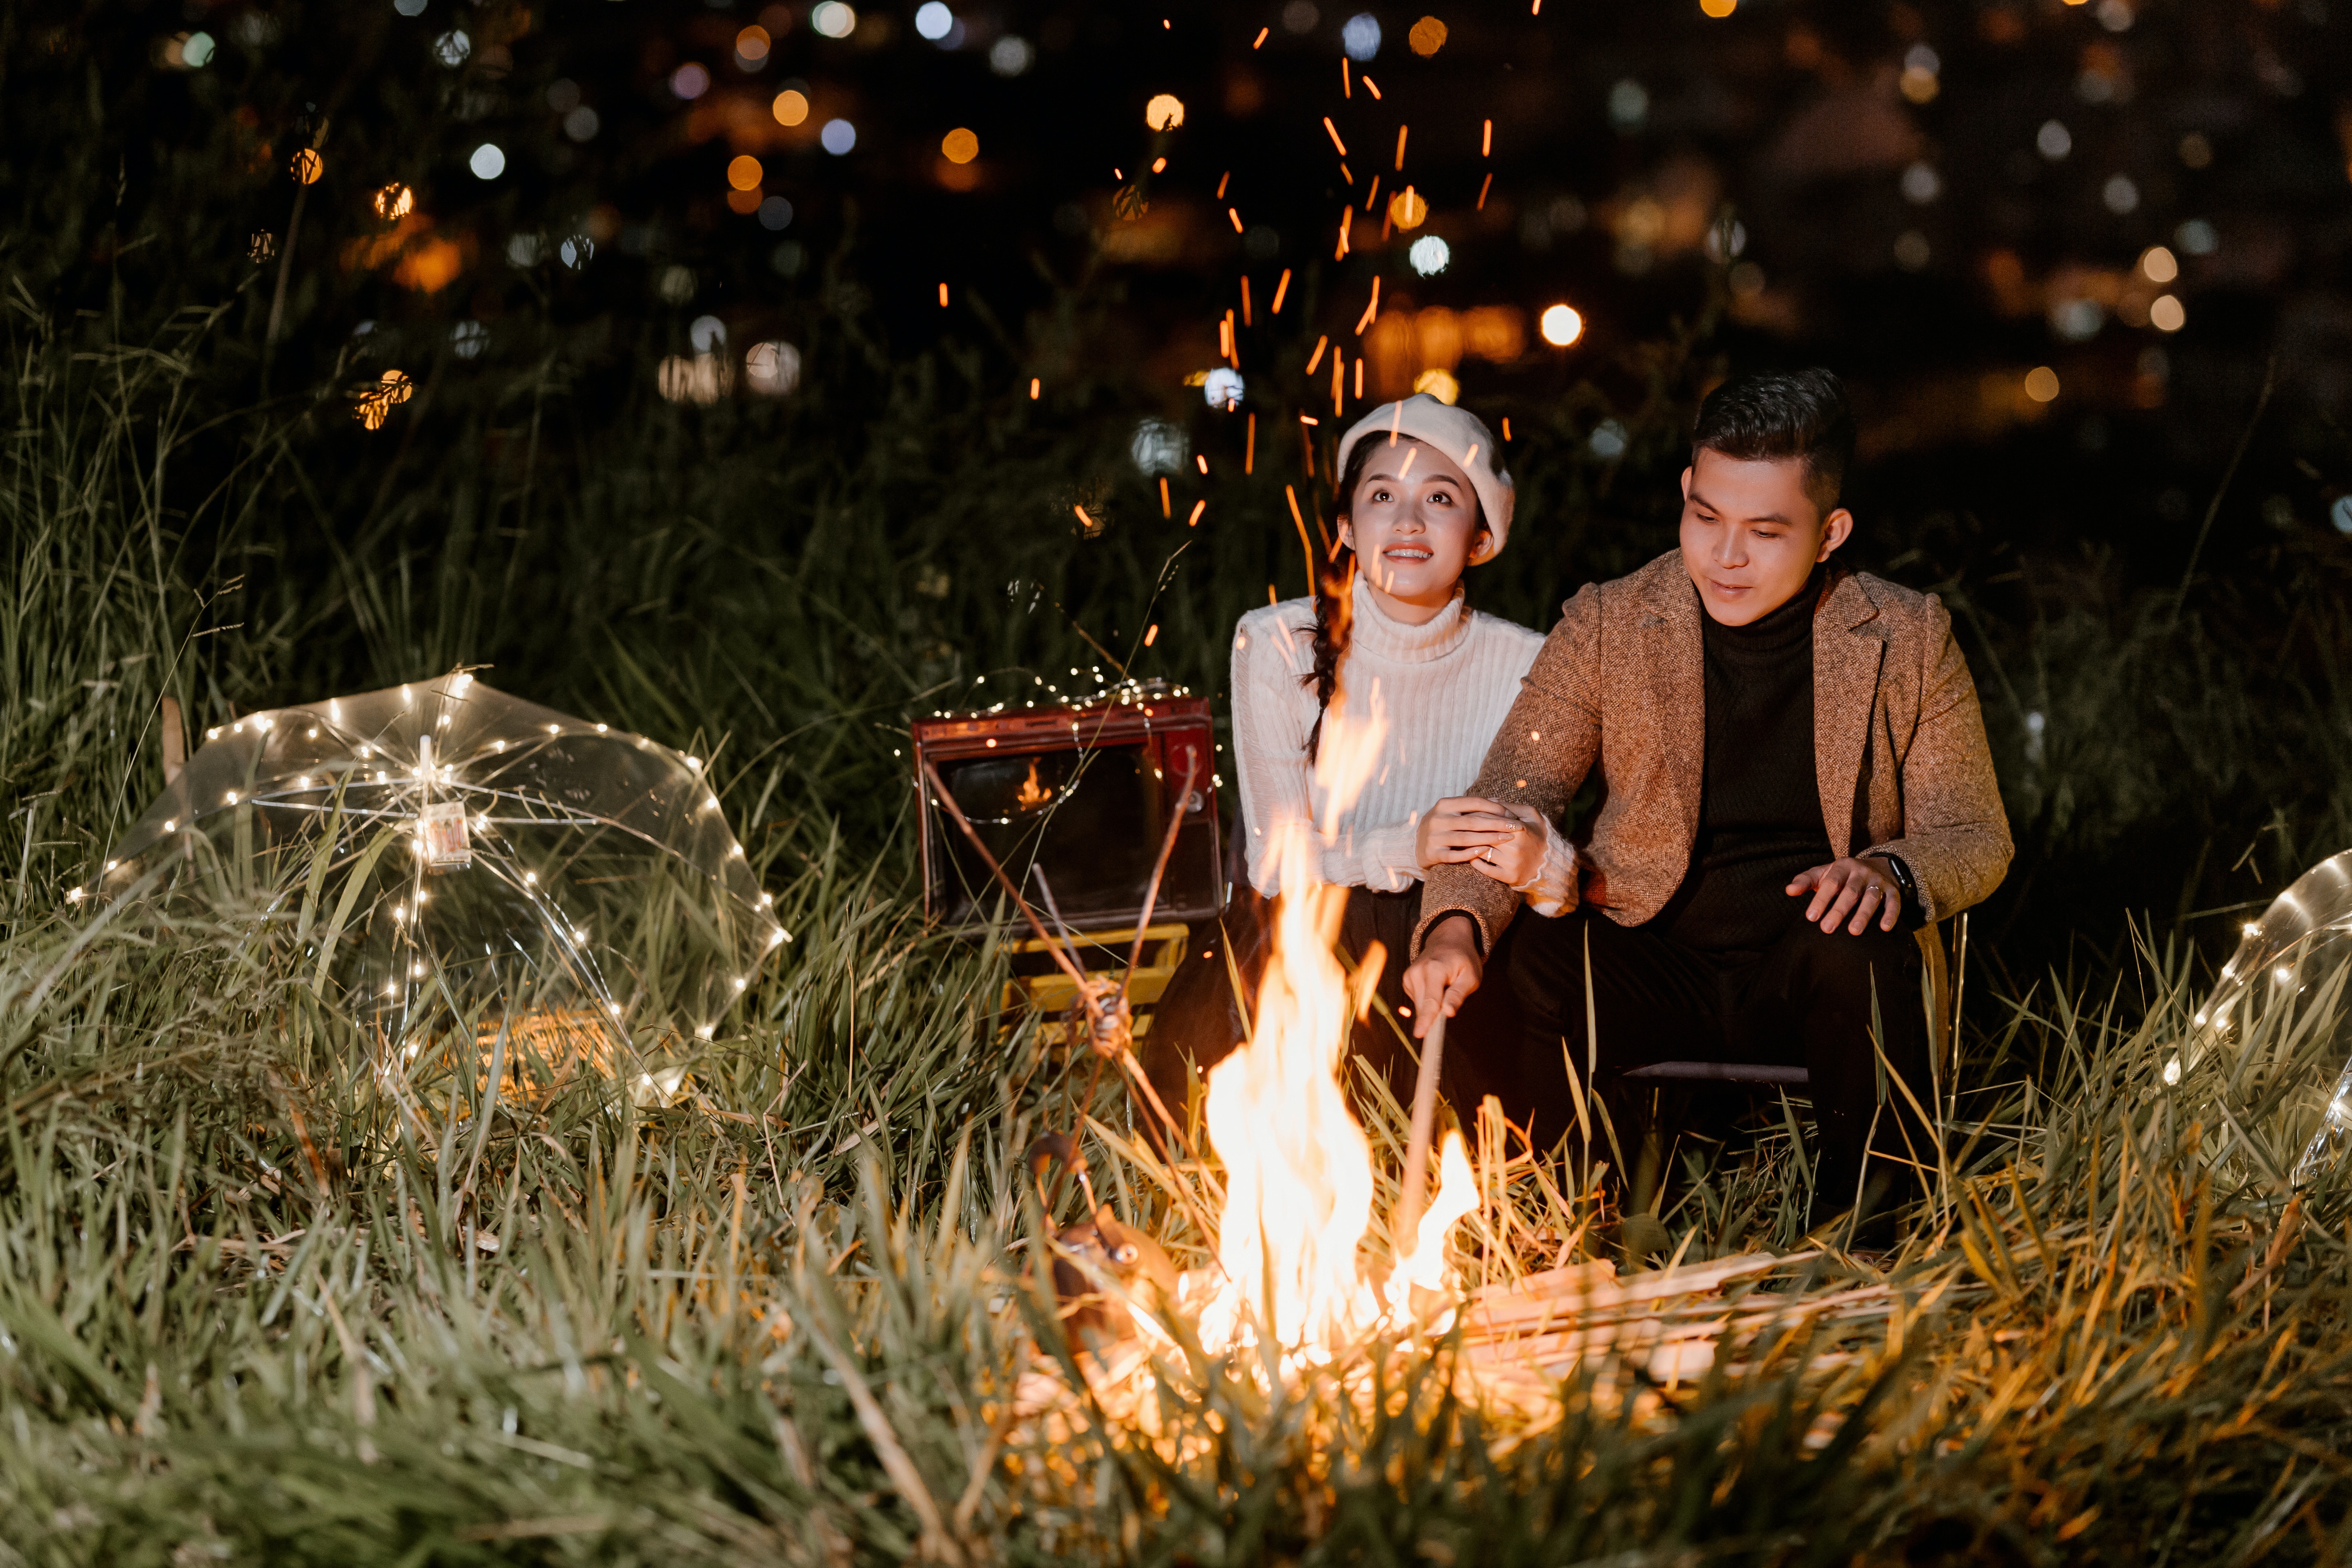 A couple sitting by a bonfire. | Source: Pexels